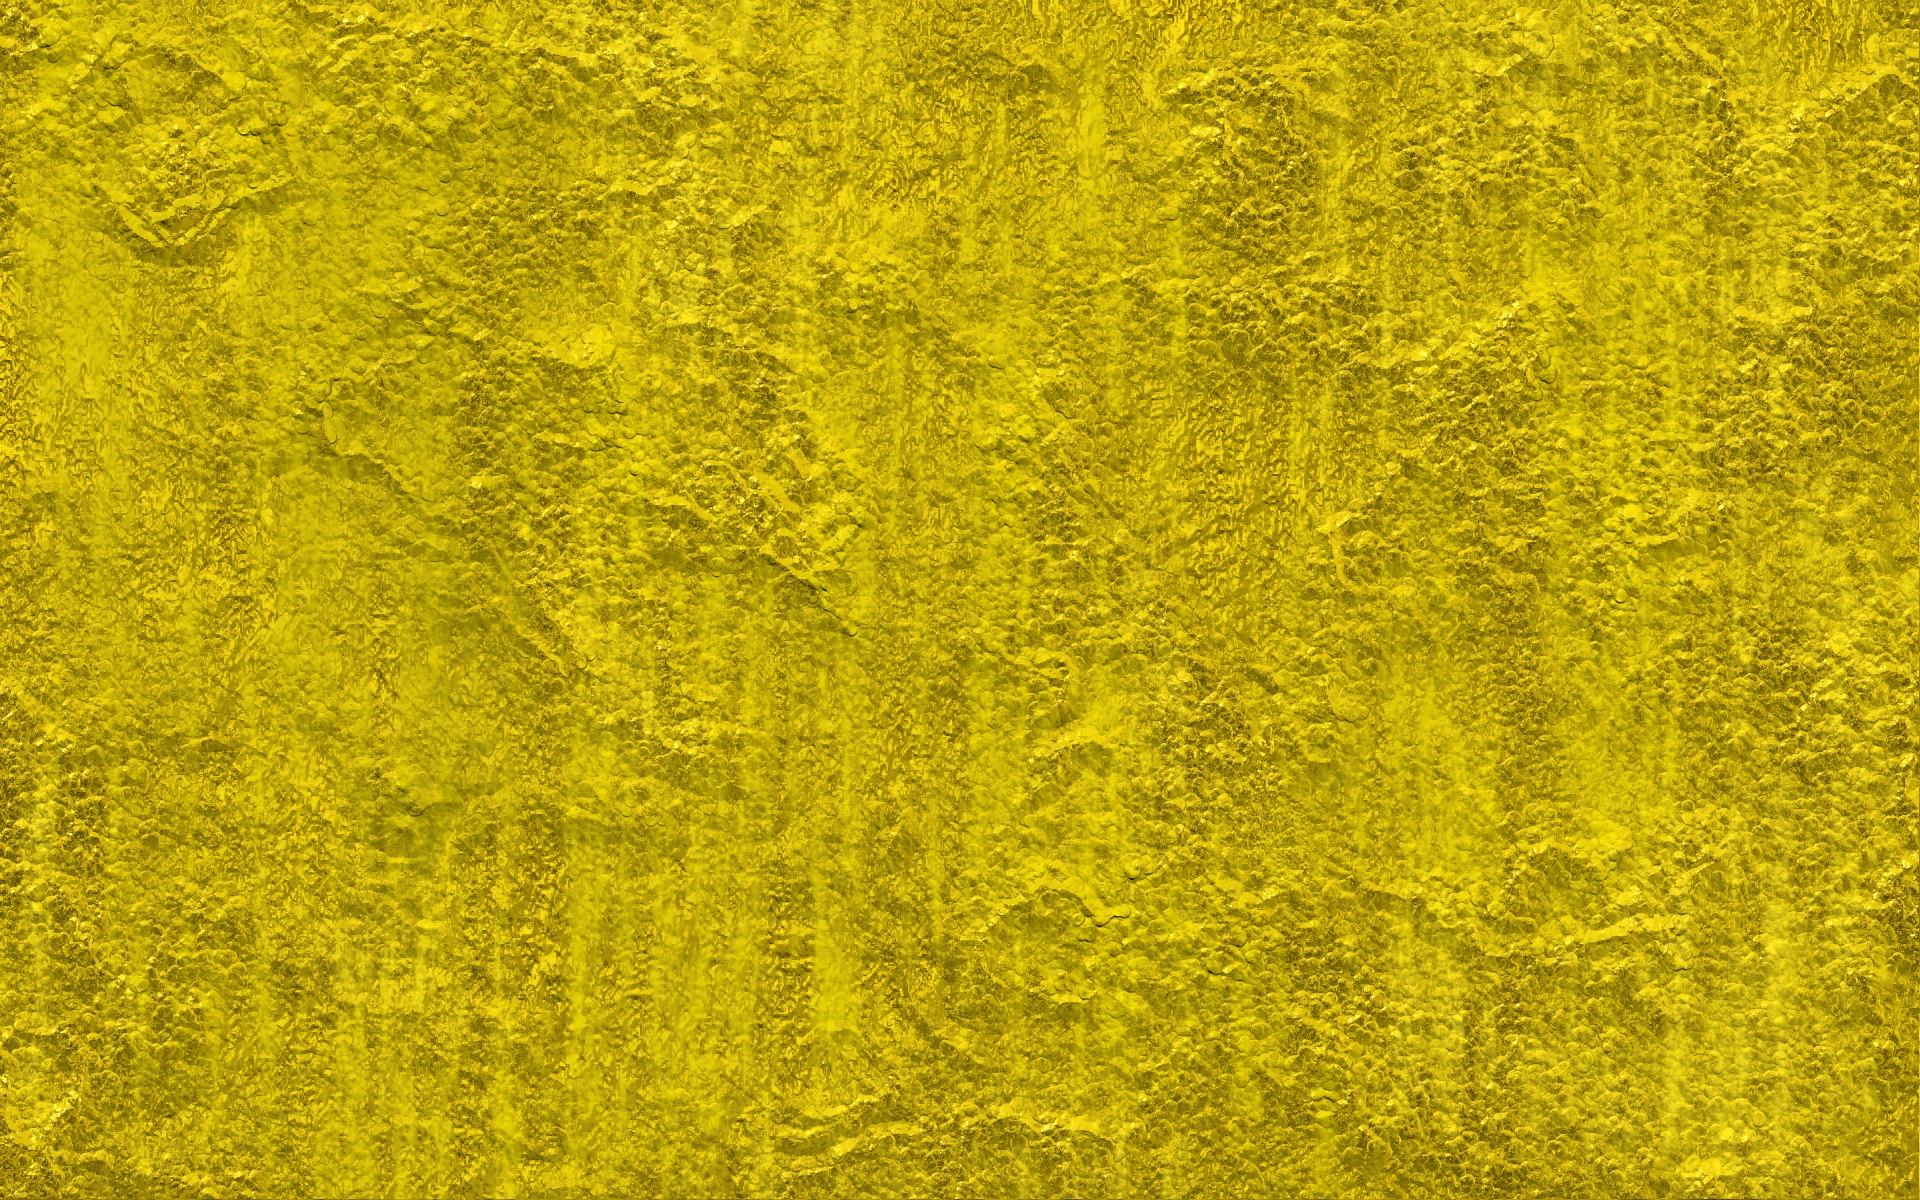 Golden yellow rough stone textured background